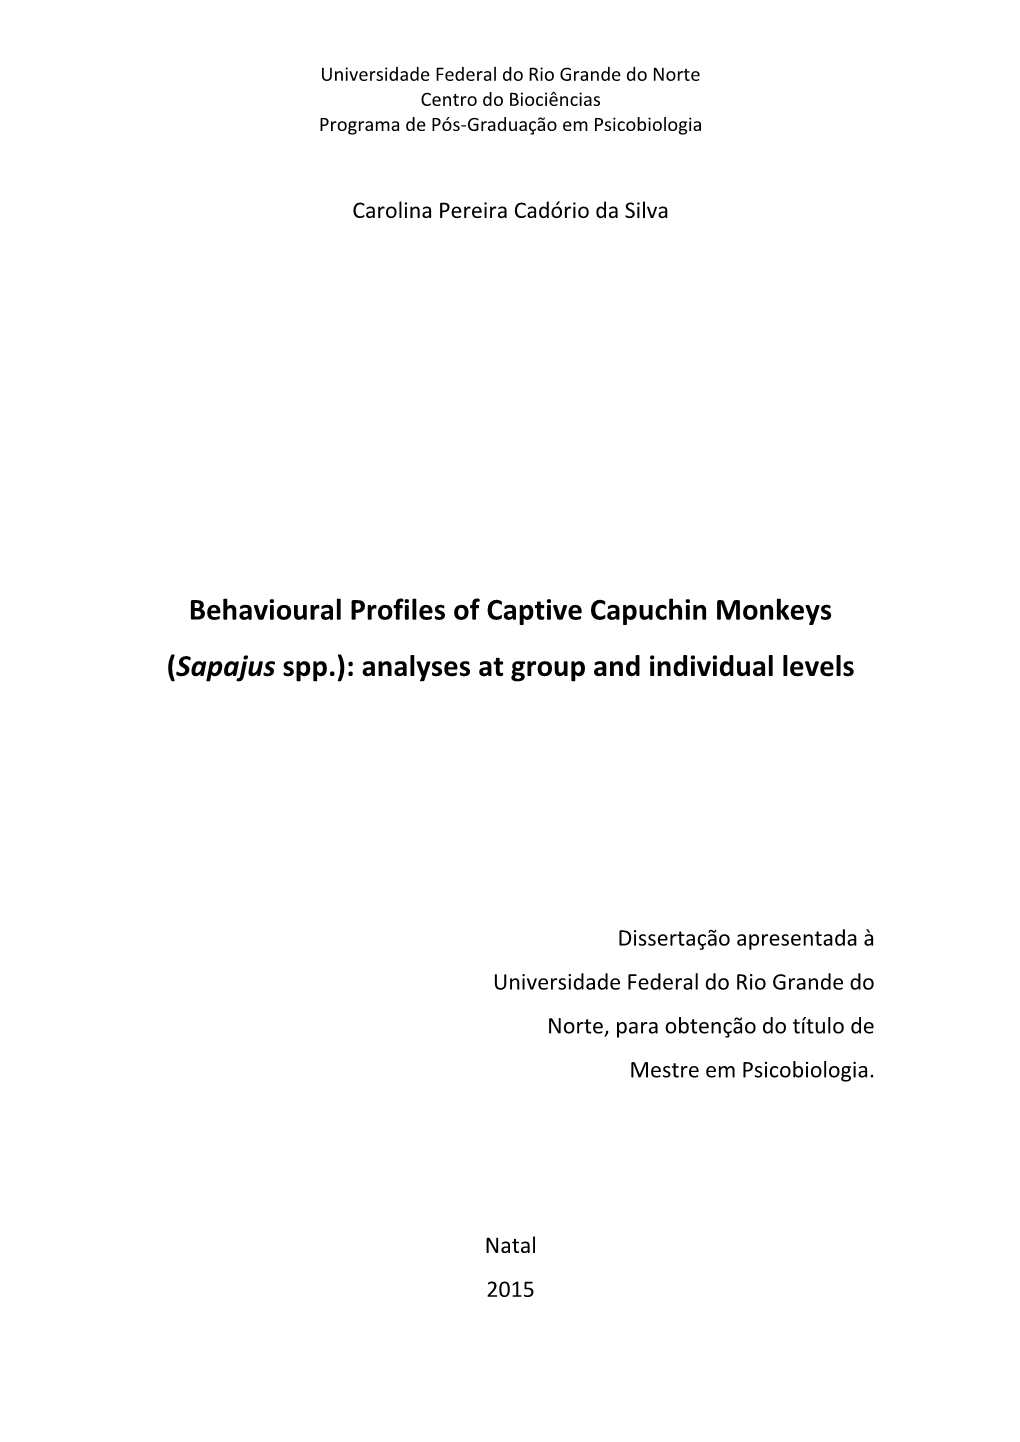 Behavioural Profiles of Captive Capuchin Monkeys (Sapajus Spp.): Analyses at Group and Individual Levels